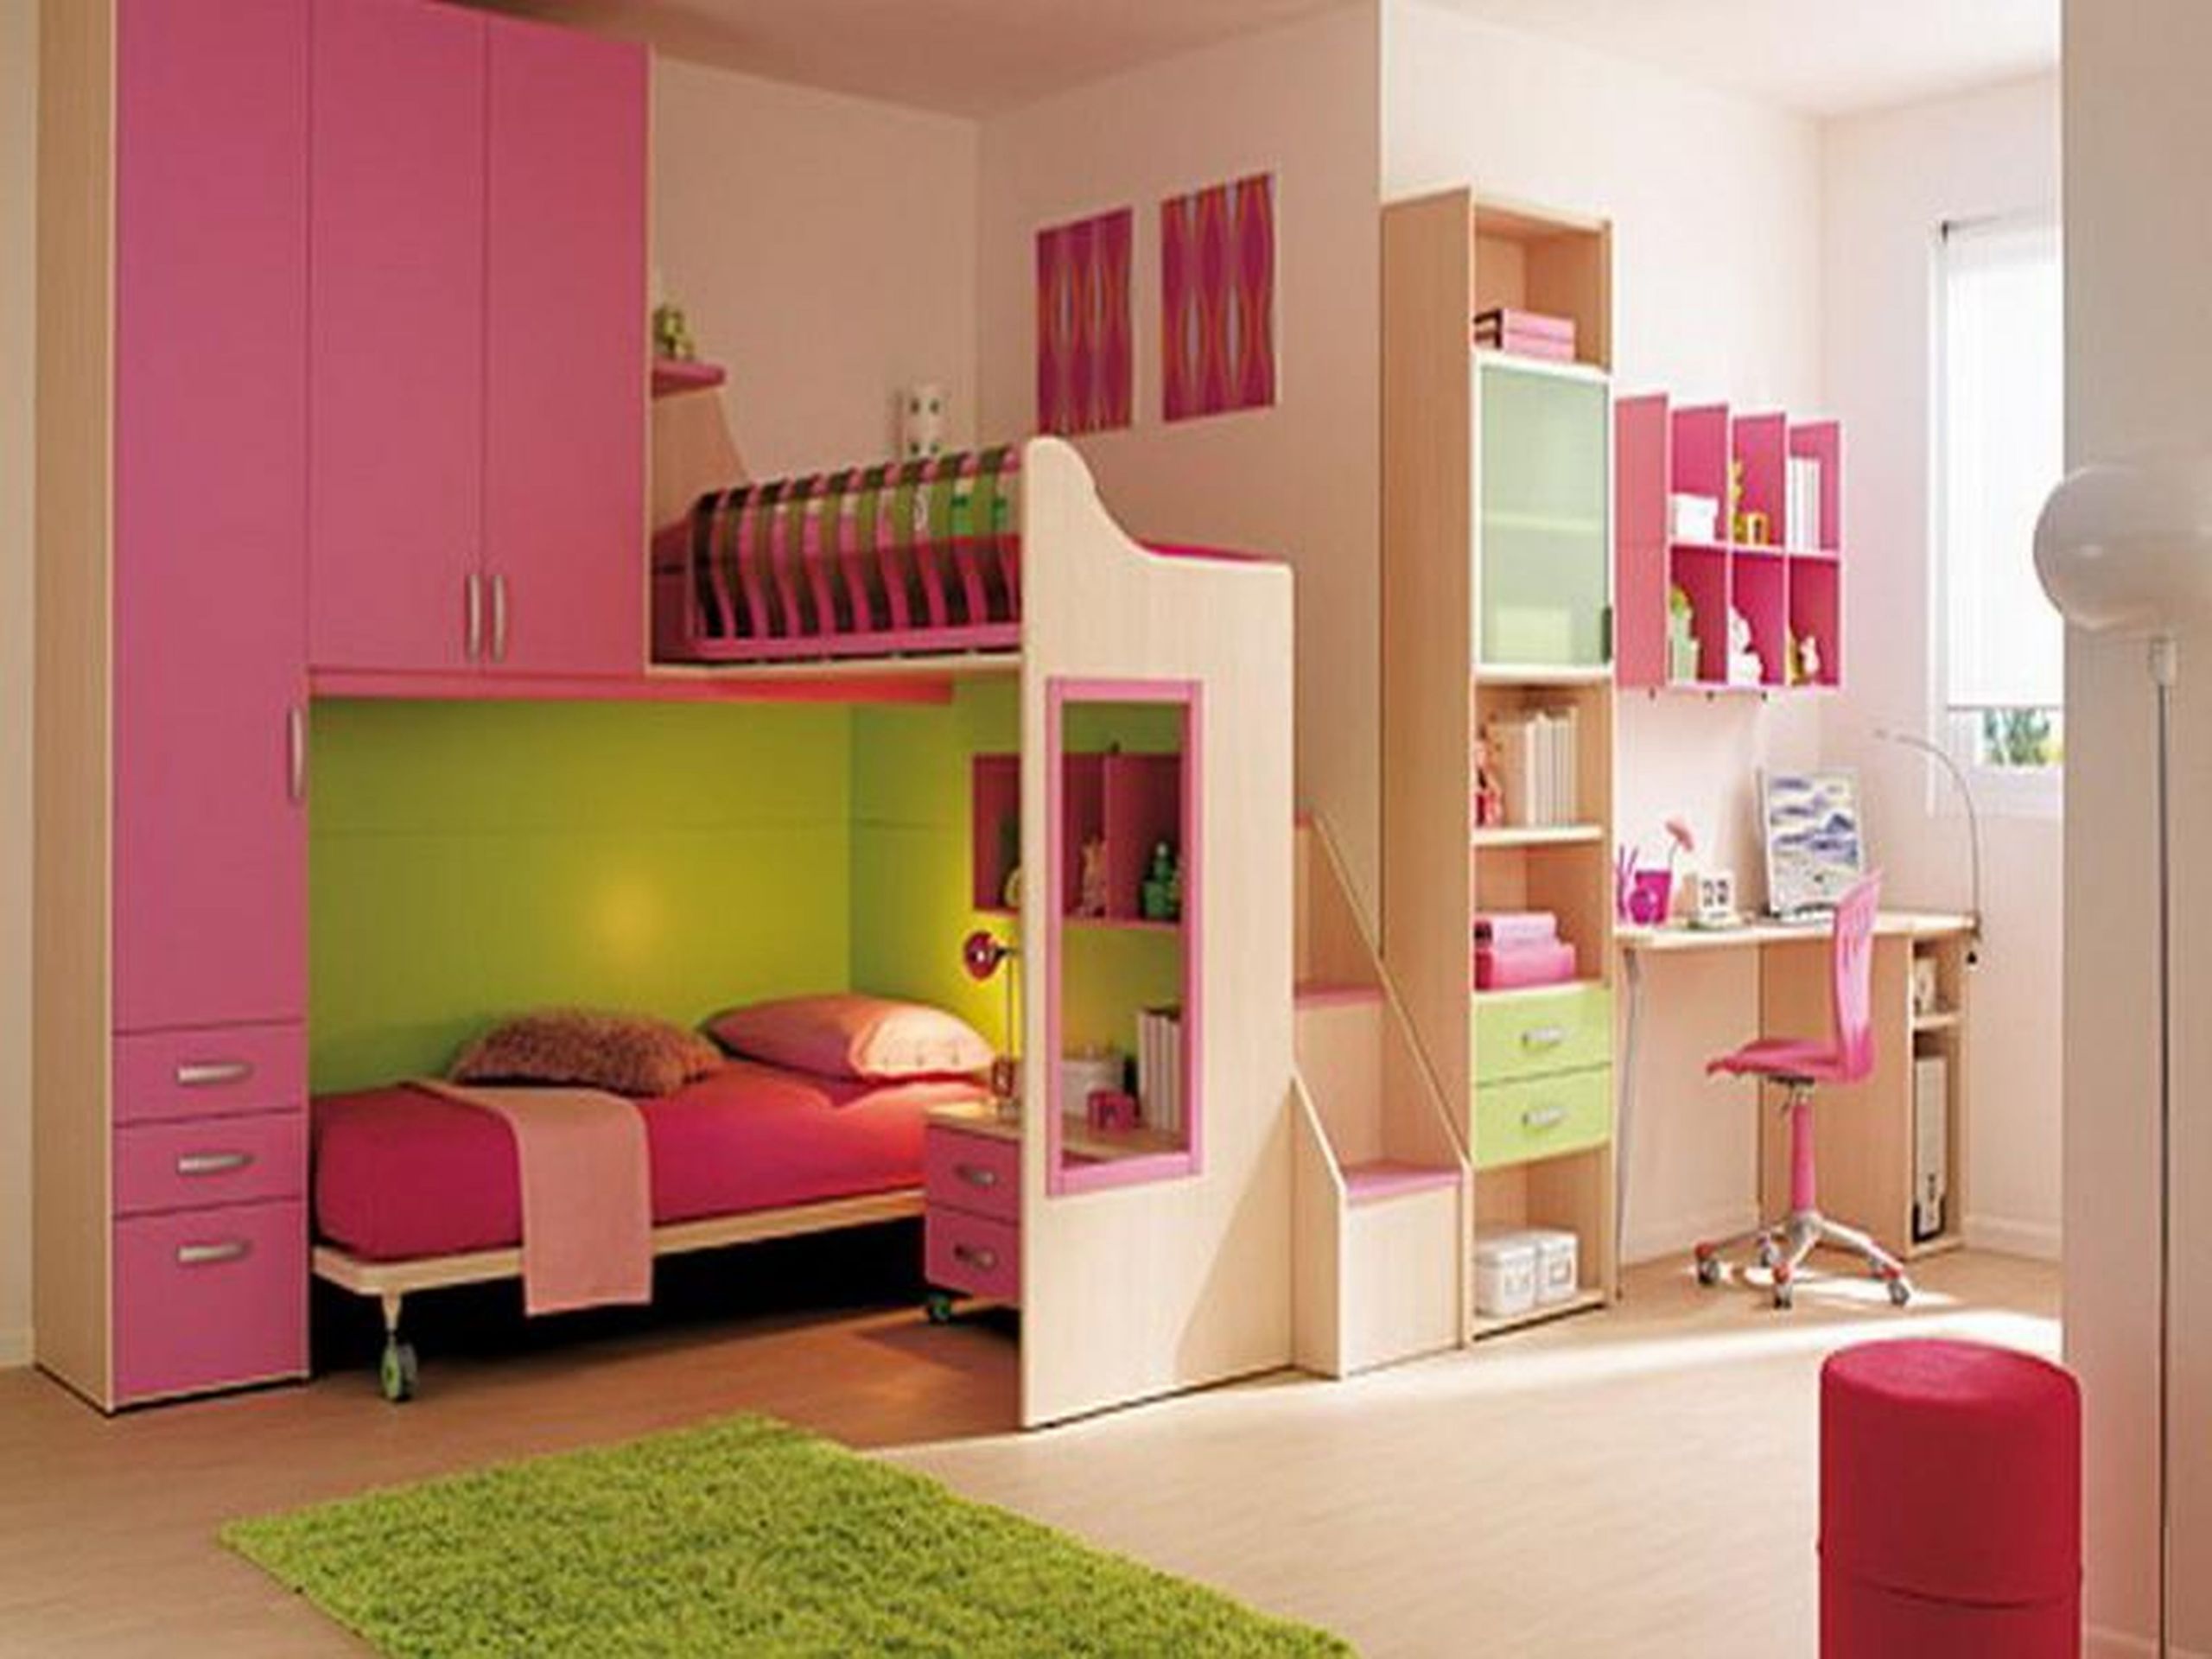 DIY Kids Bedrooms
 DIY Storage Ideas For Kids Room Crafts To Do With Kids